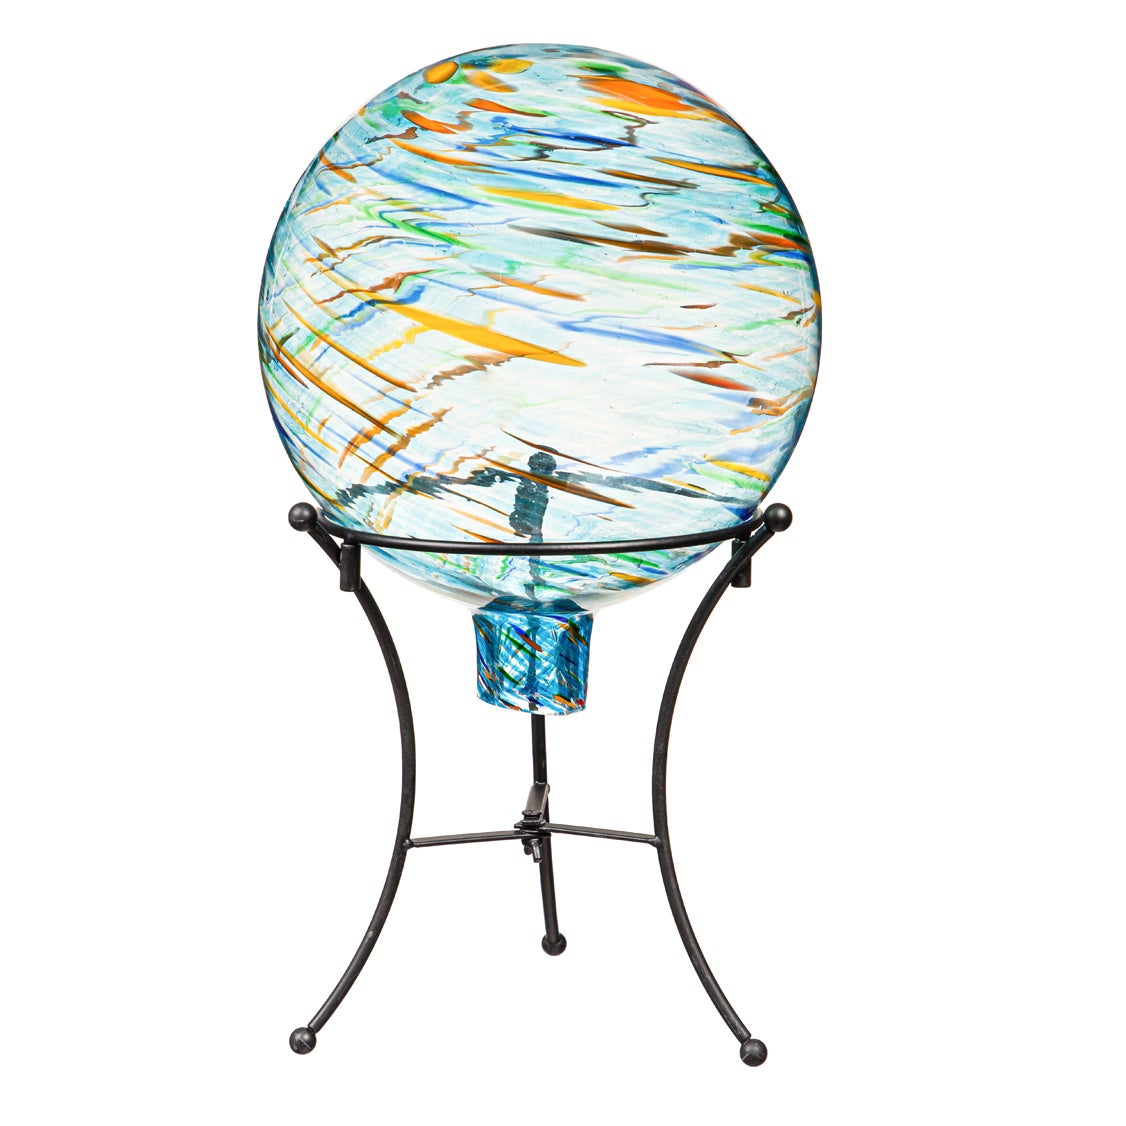 10" Art Glass Turquoise Swirl Gazing Ball with Stand